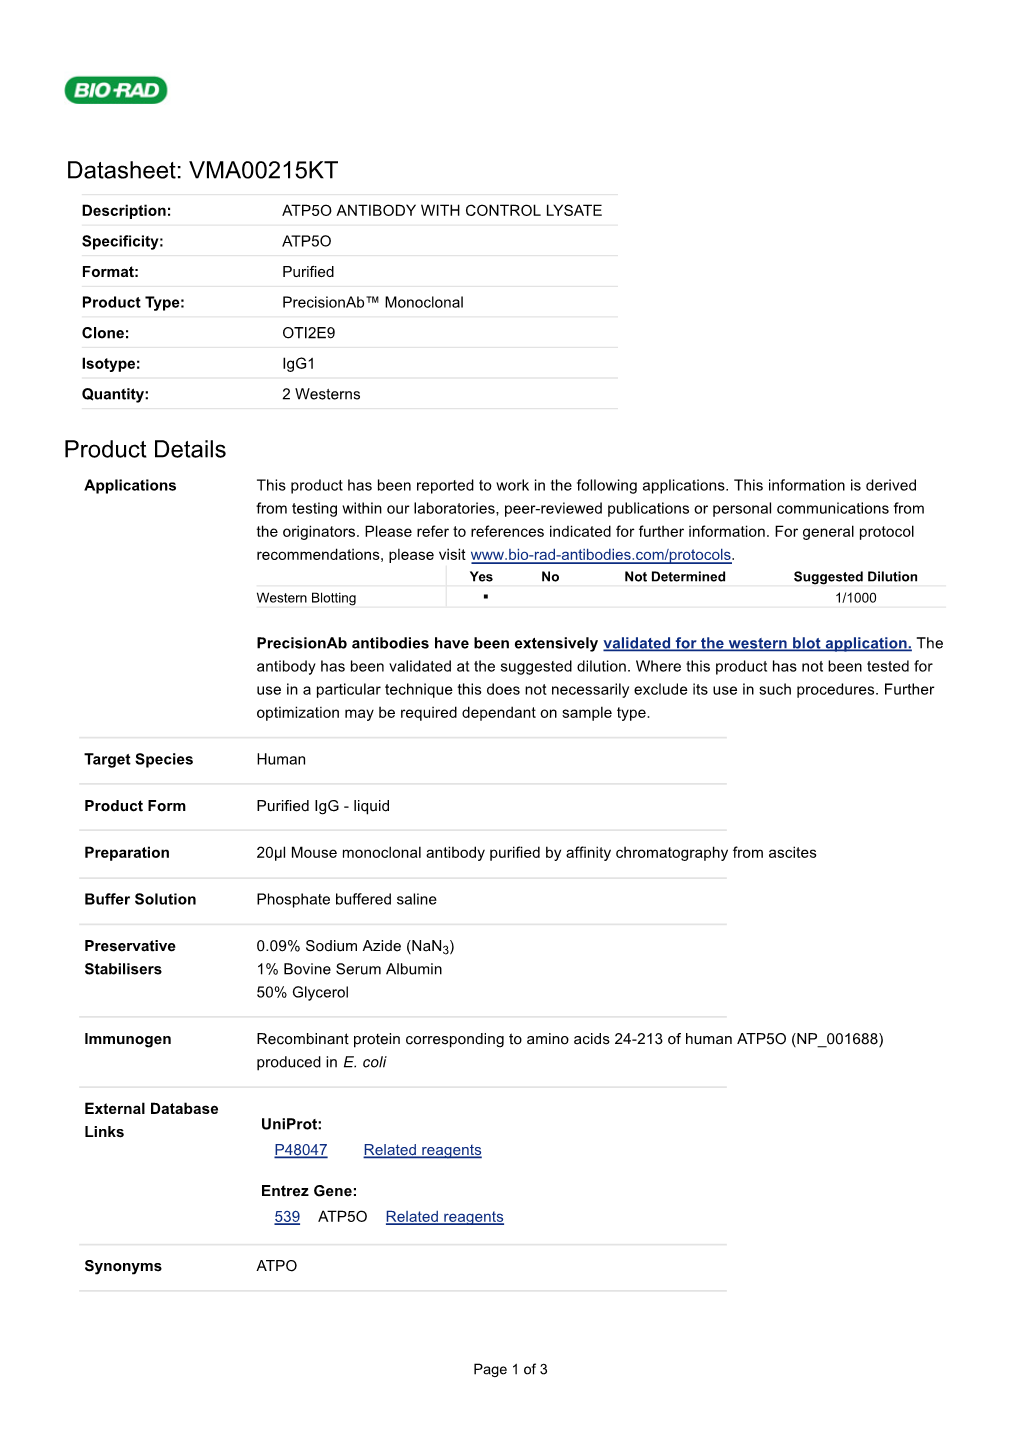 Datasheet: VMA00215KT Product Details